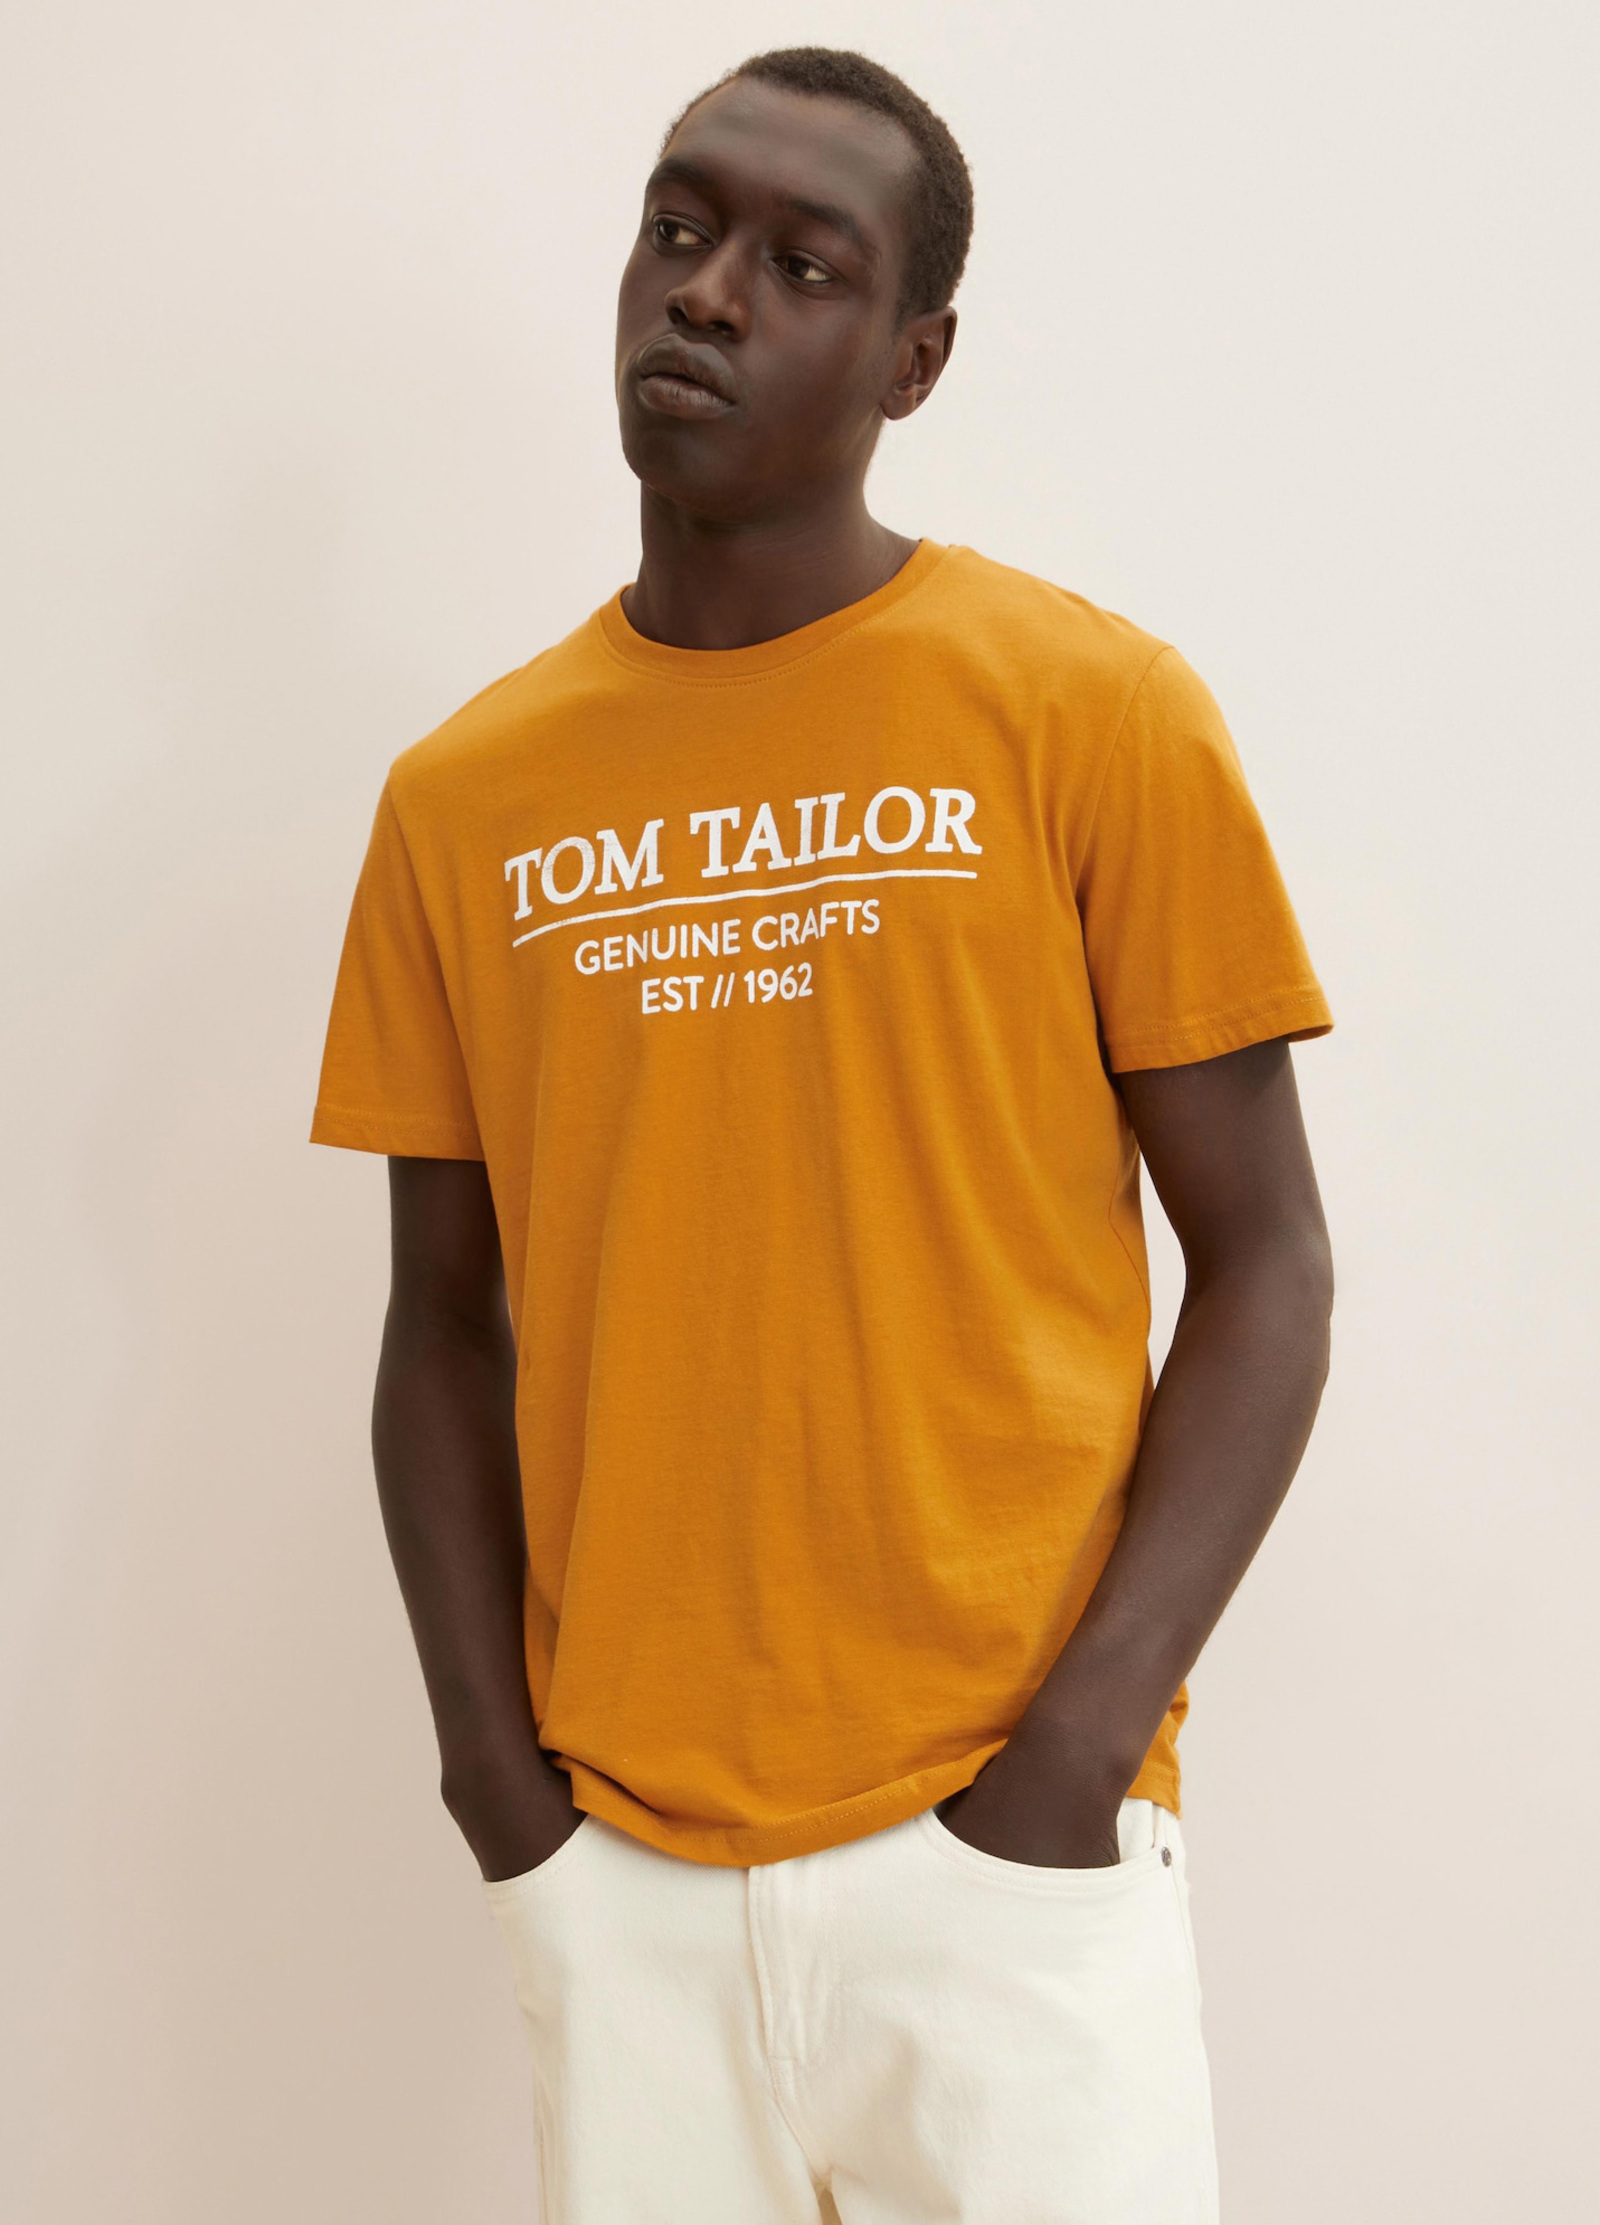 Tom Tailor® T-shirt Logo Brown Size Butter Peanut - L